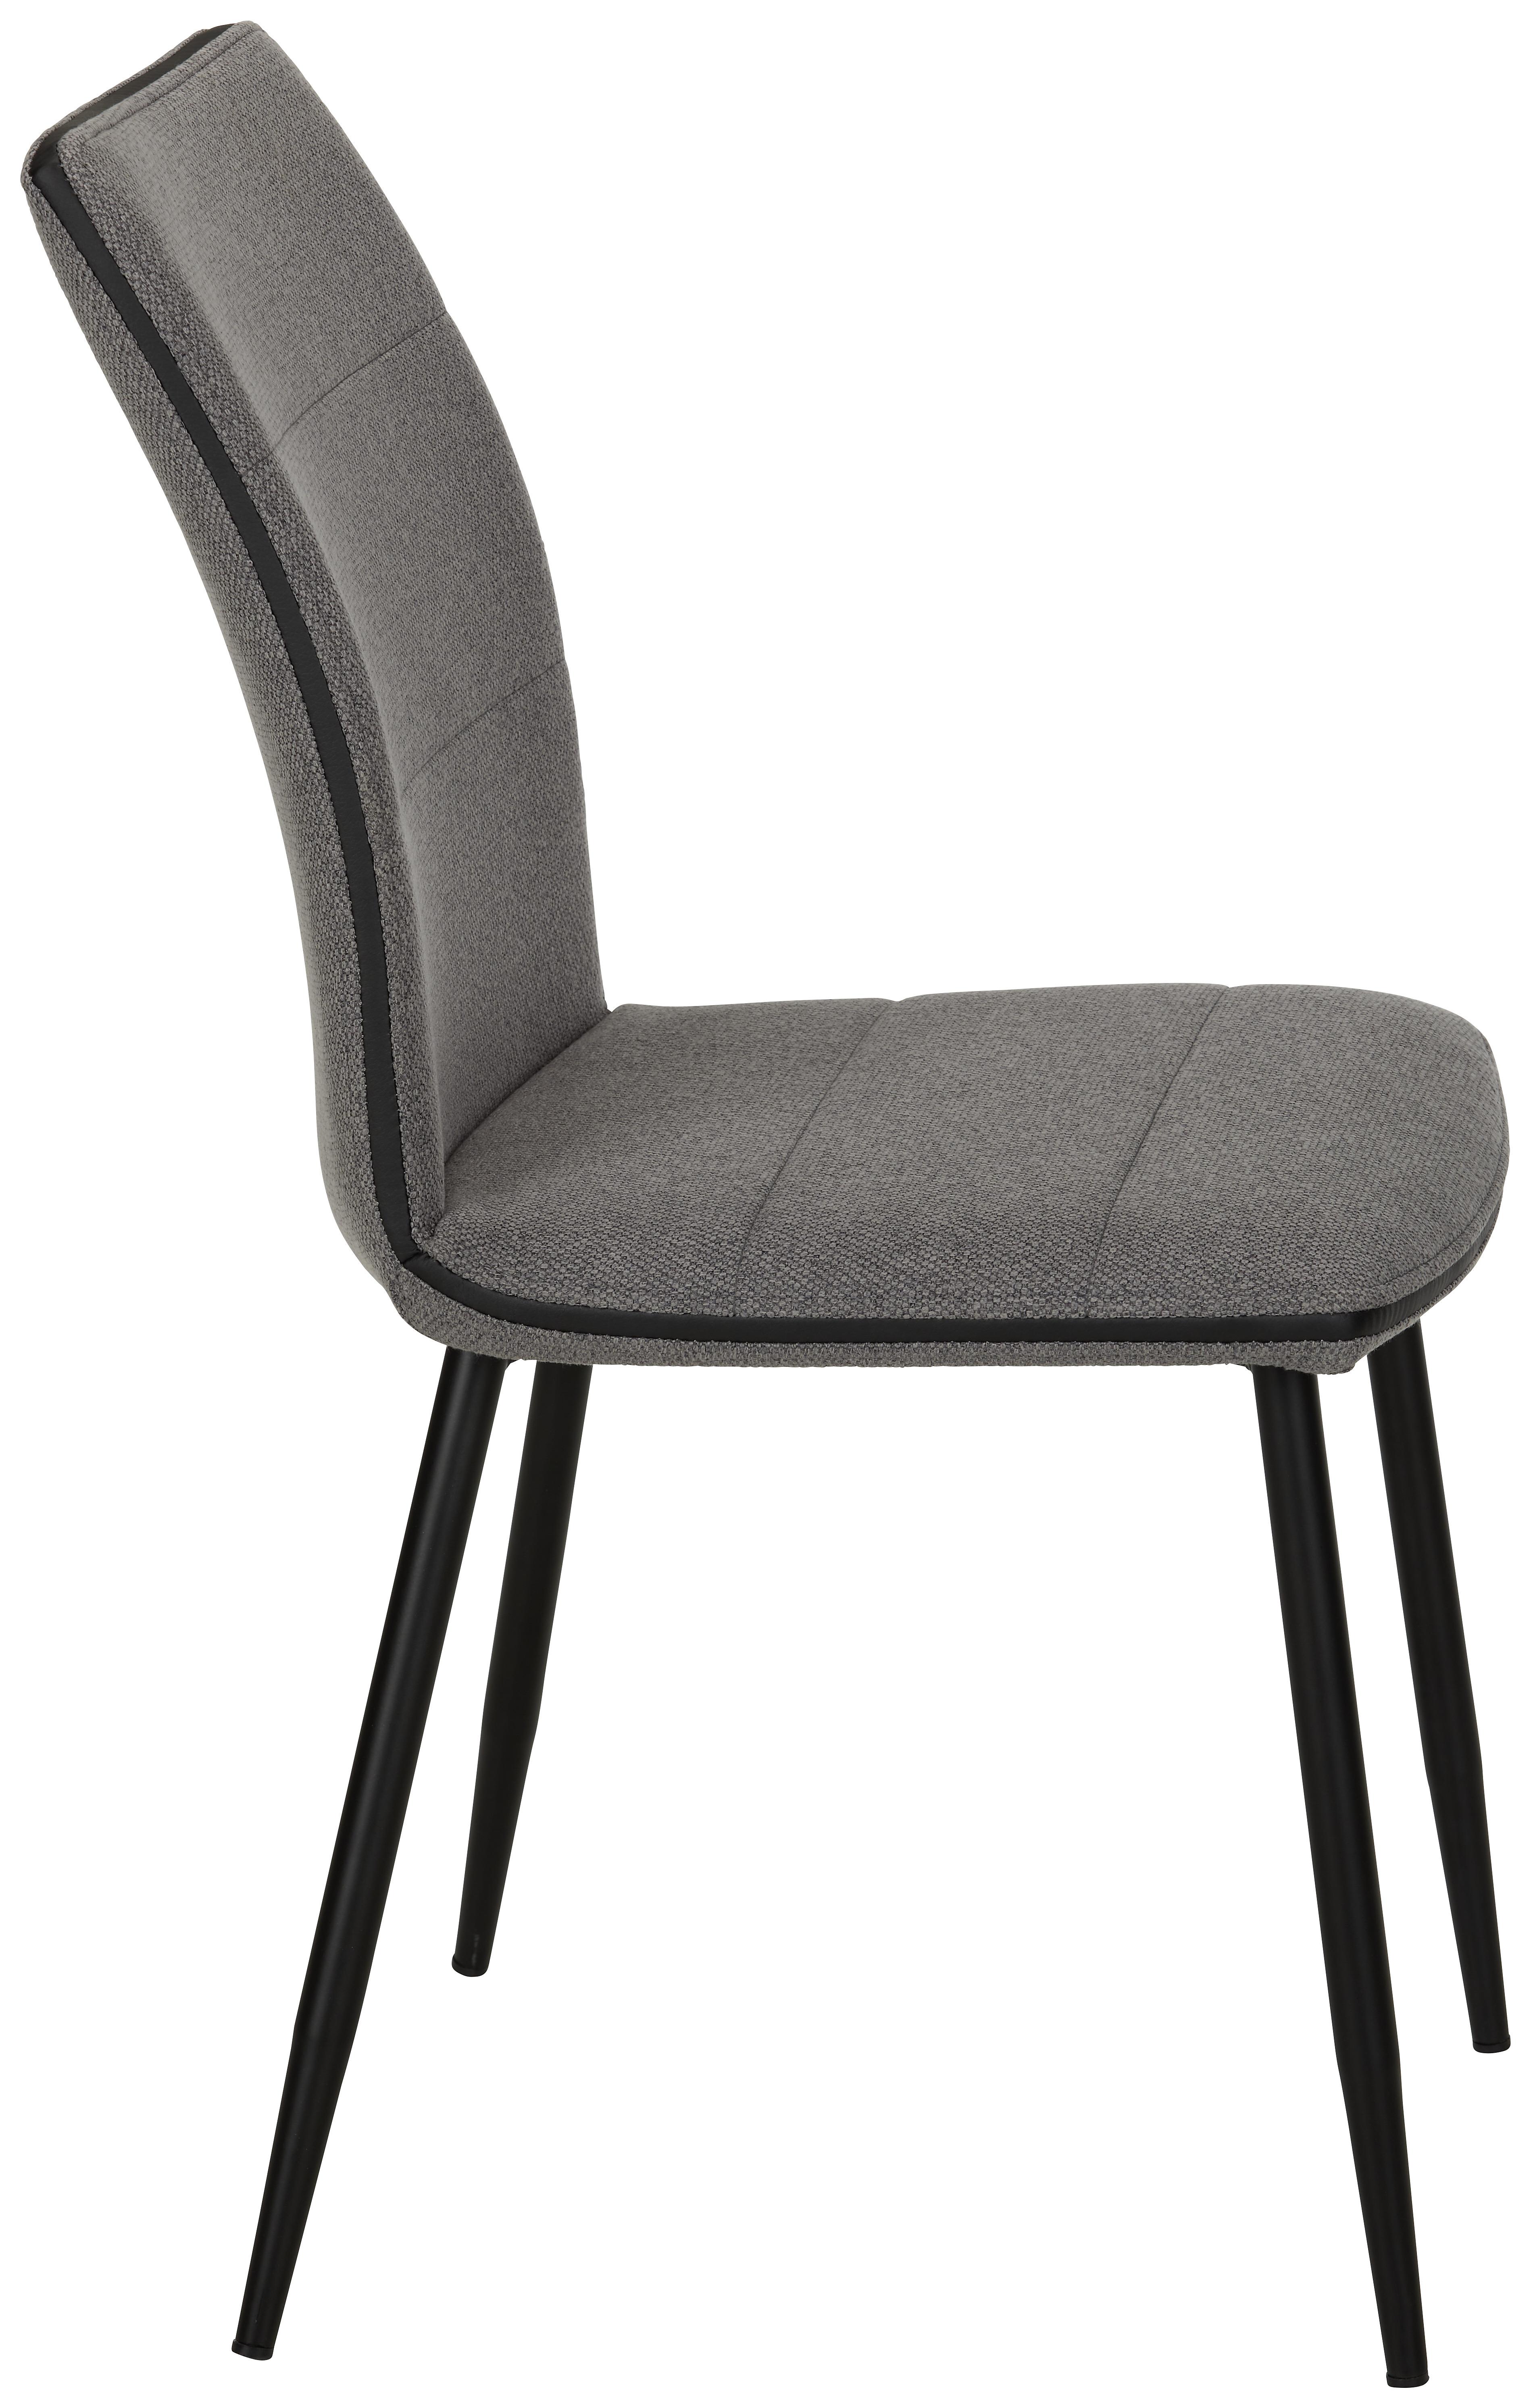 Stuhl in Grau - Schwarz/Grau, Modern, Textil/Metall (45/87/57cm) - Modern Living